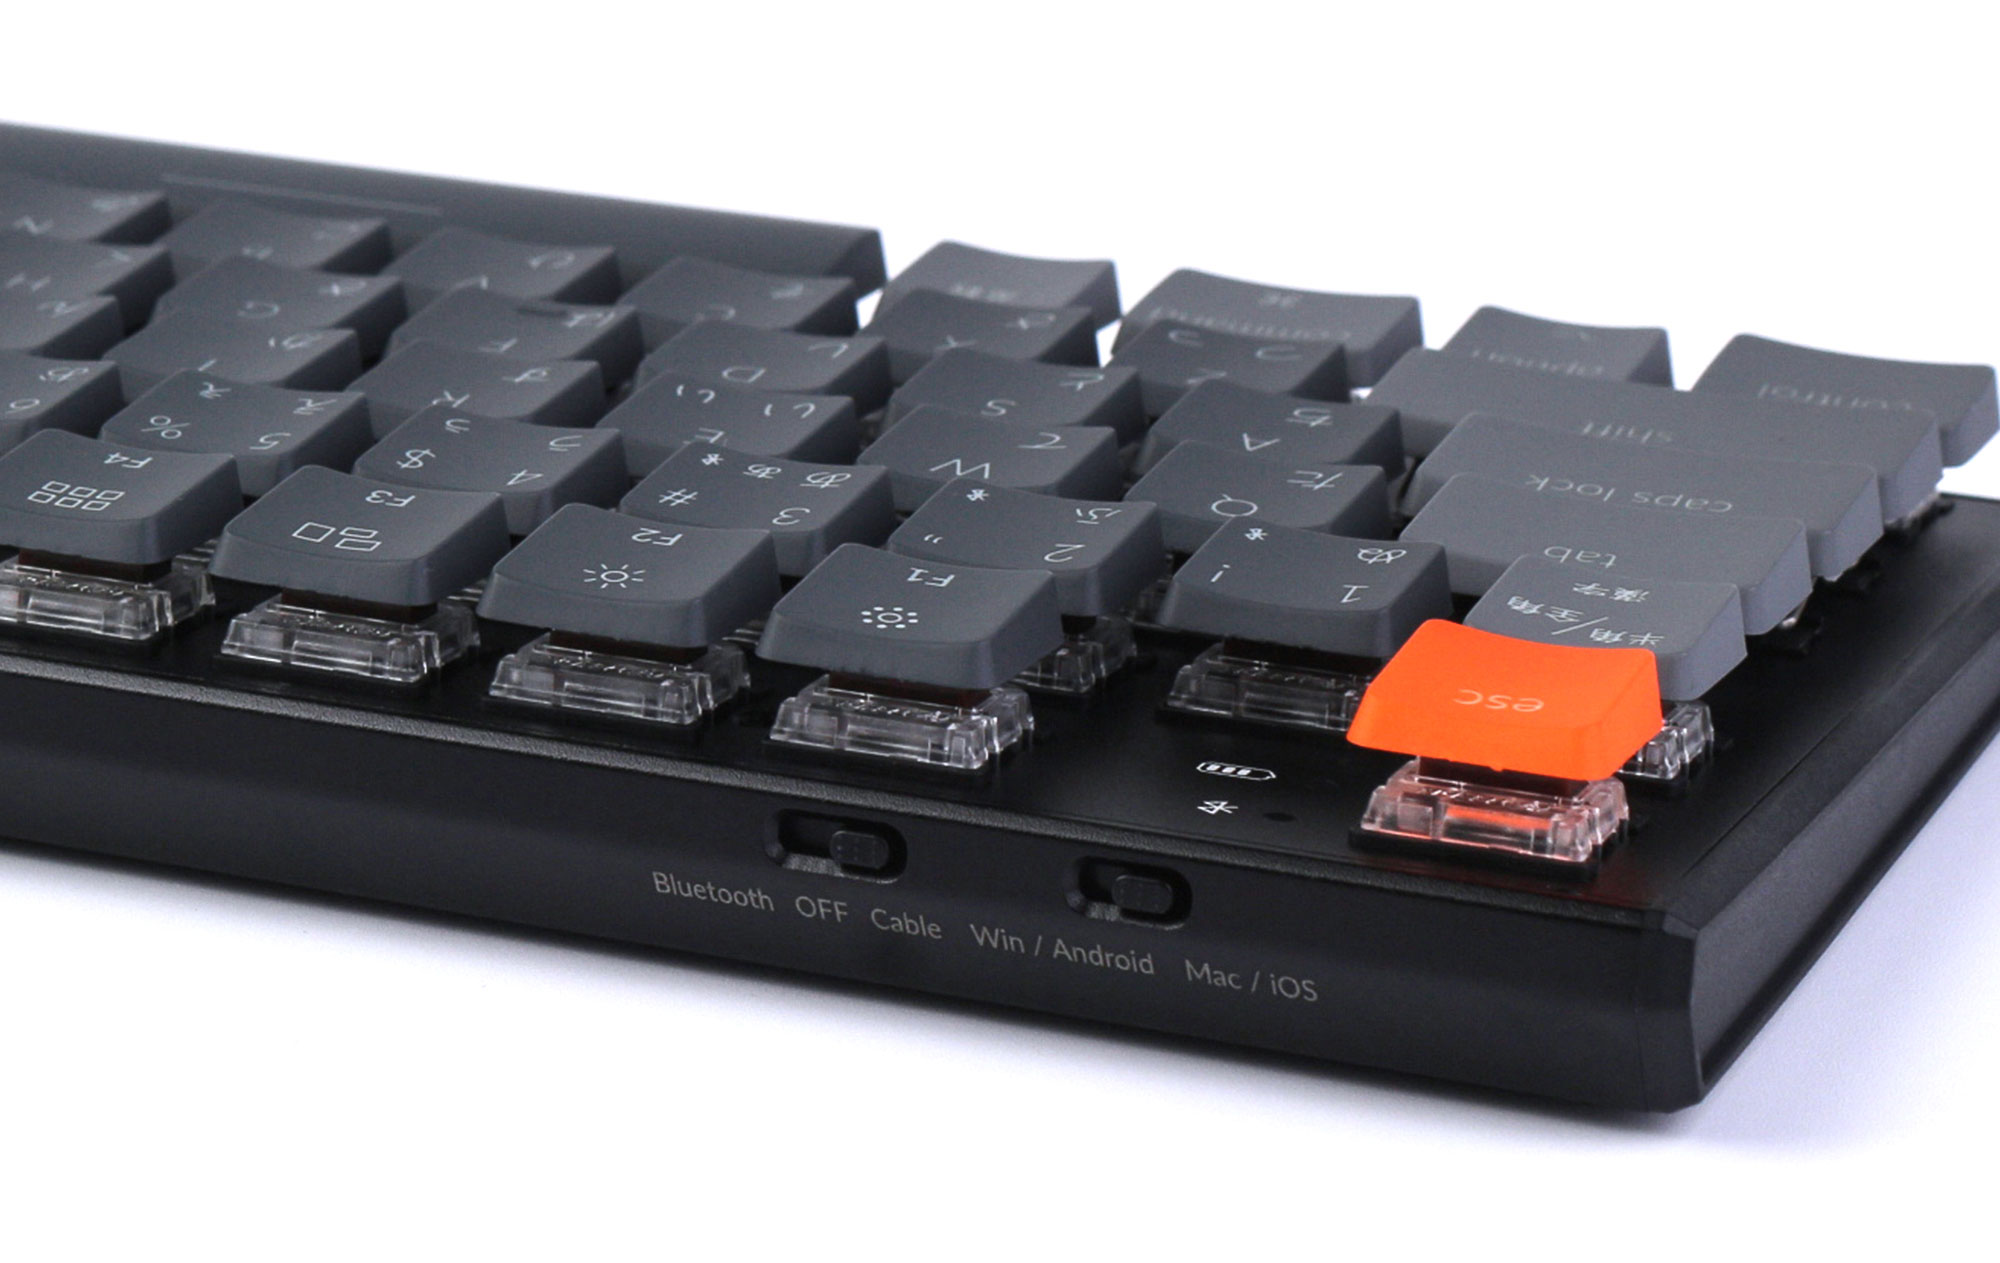 Keychron K1 keyboard 日本語対応　赤軸